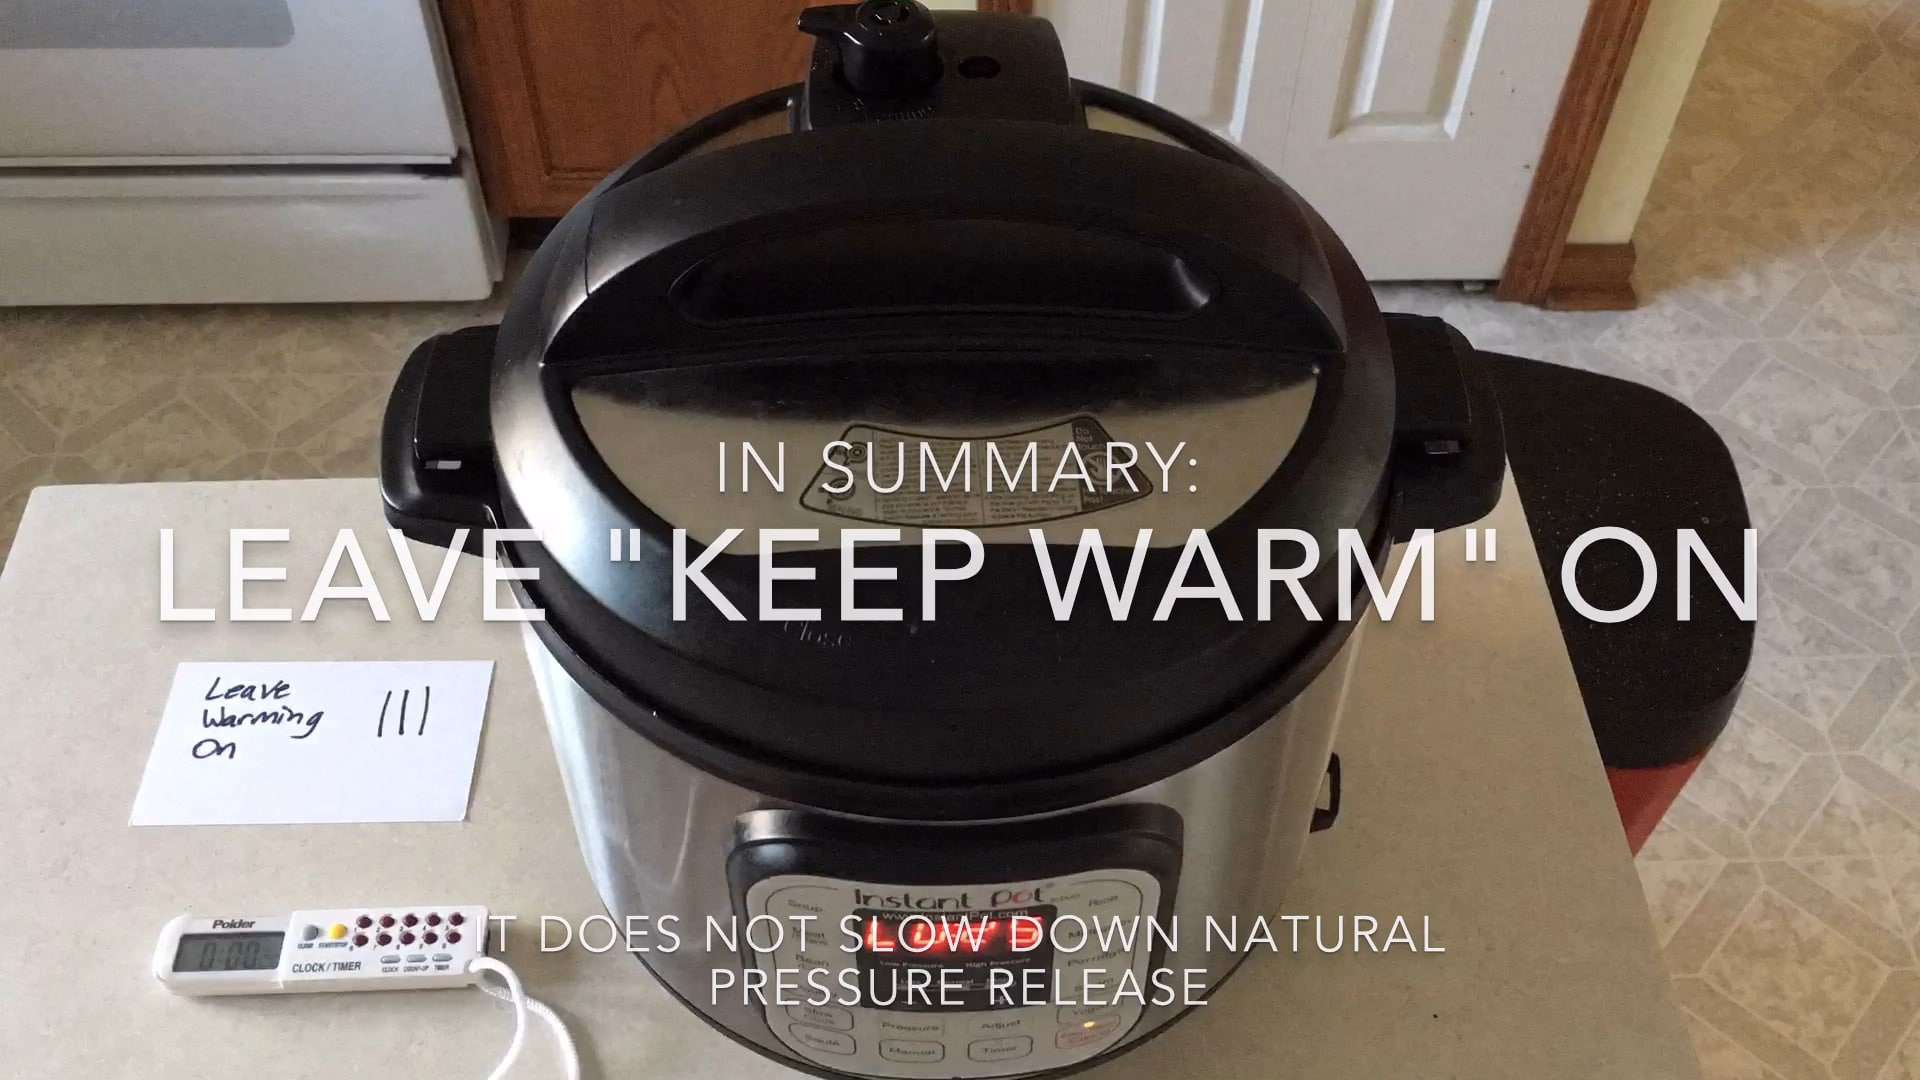 https://www.dadcooksdinner.com/wp-content/uploads/2016/01/Instant-Pot-Keep-Warm-80.jpg